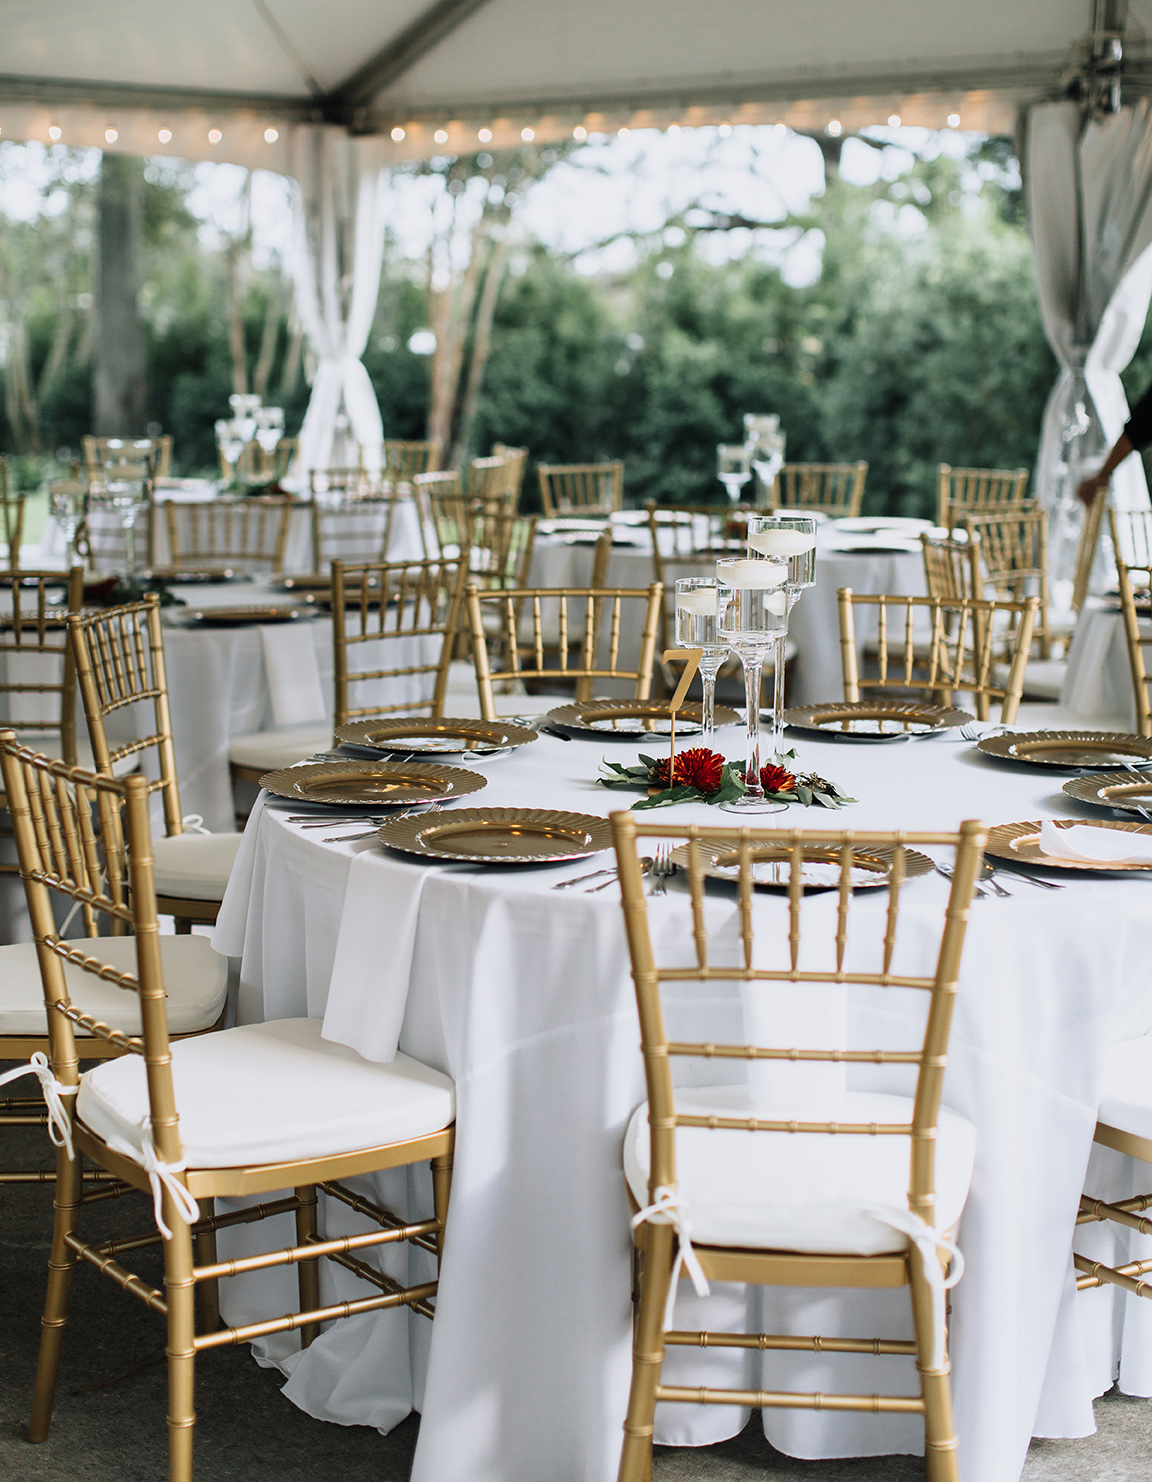 texas, real wedding, outdoor reception, garden wedding, gold chairs, tent